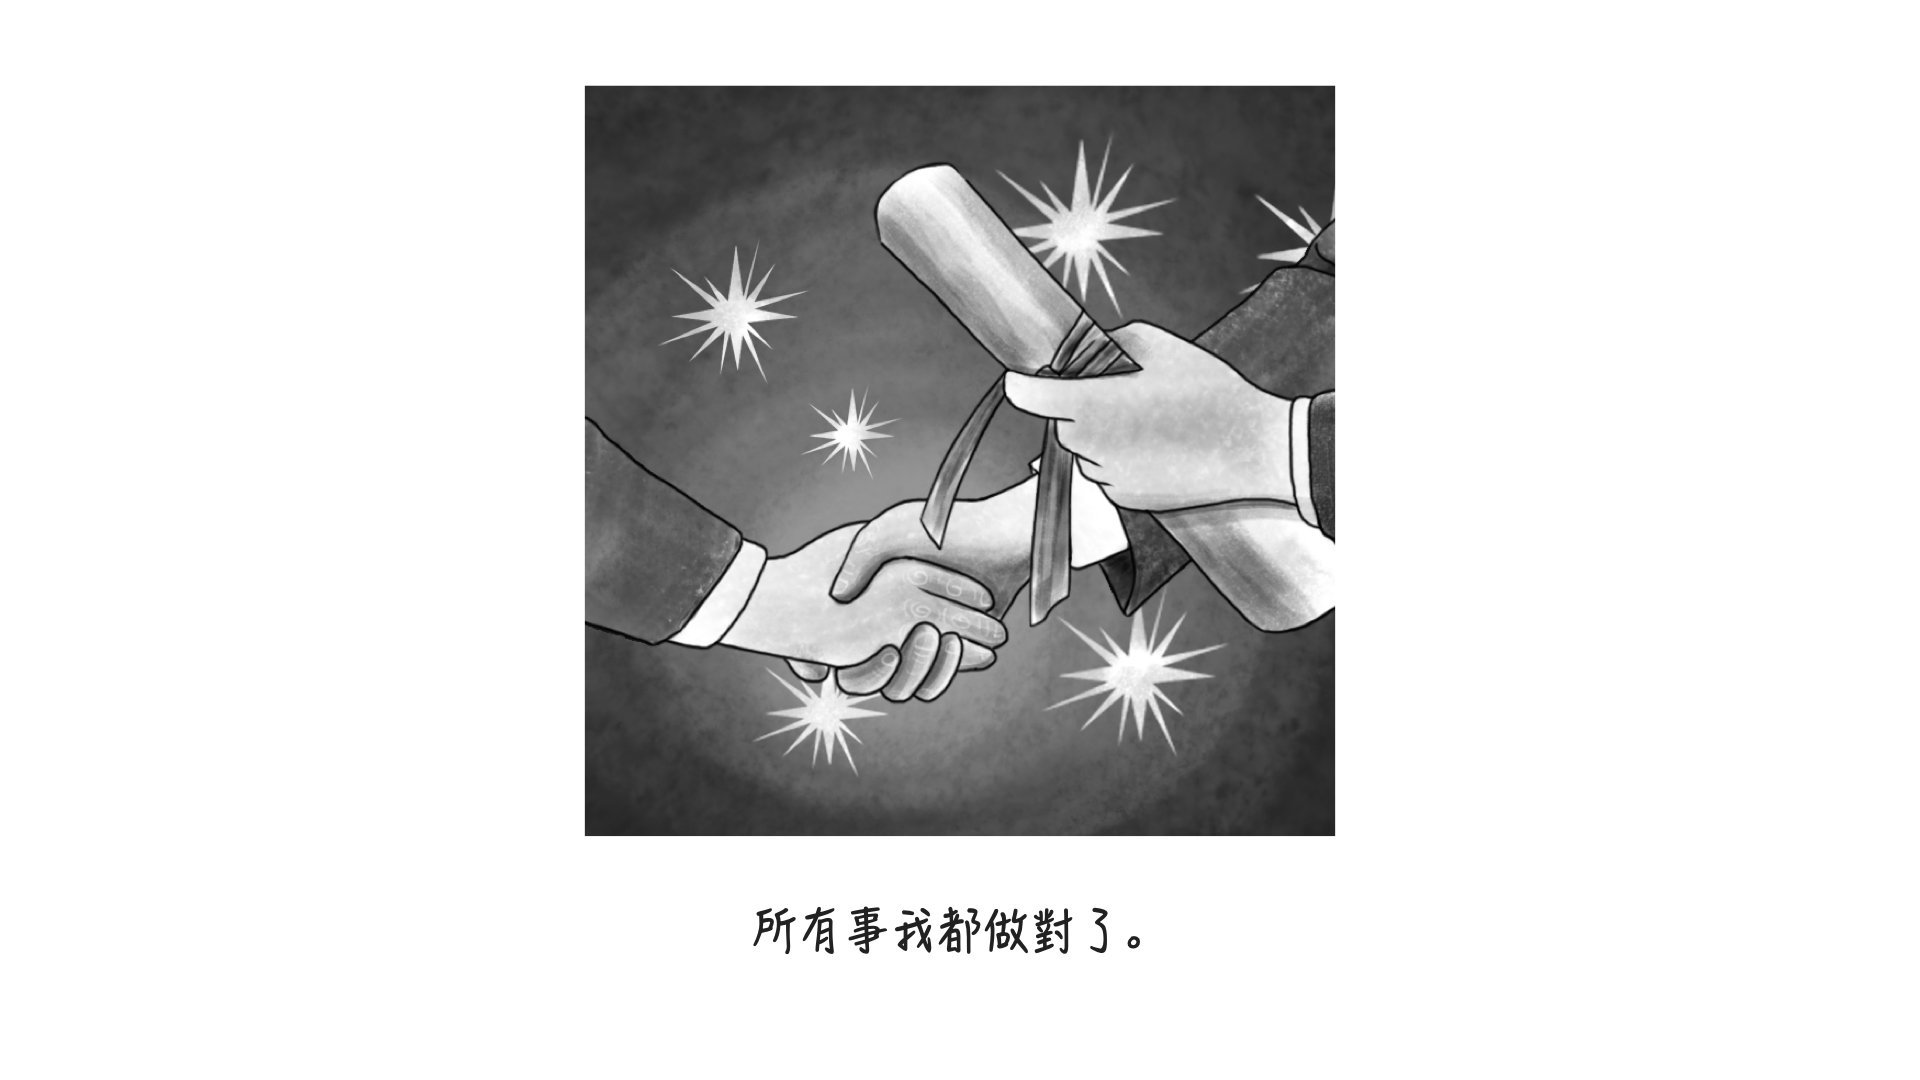 PP_Comic_Chinese_TW.019.jpeg